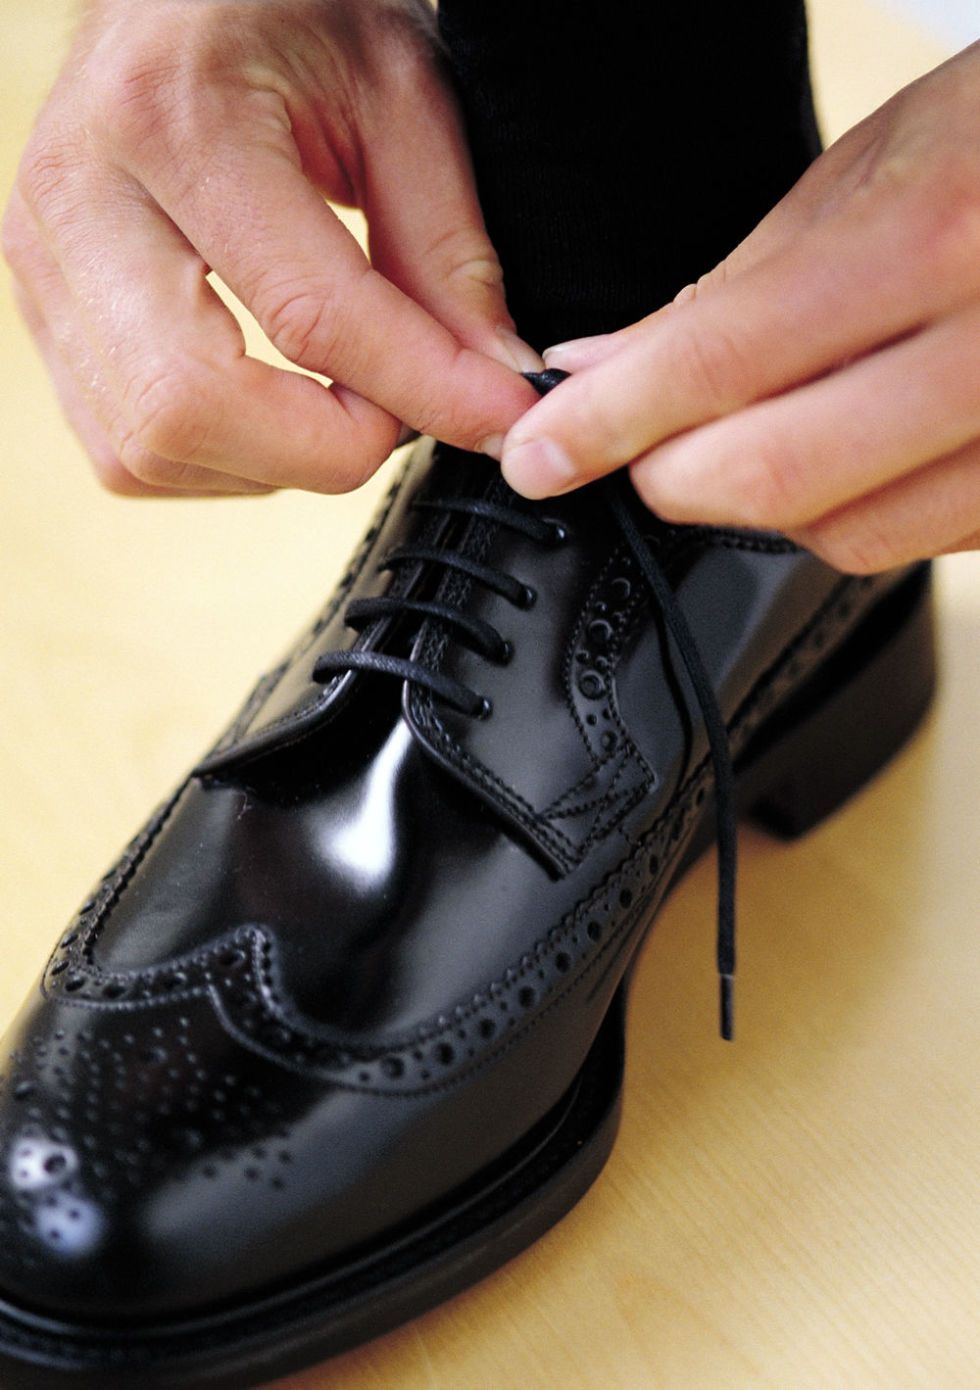 shining black leather shoes